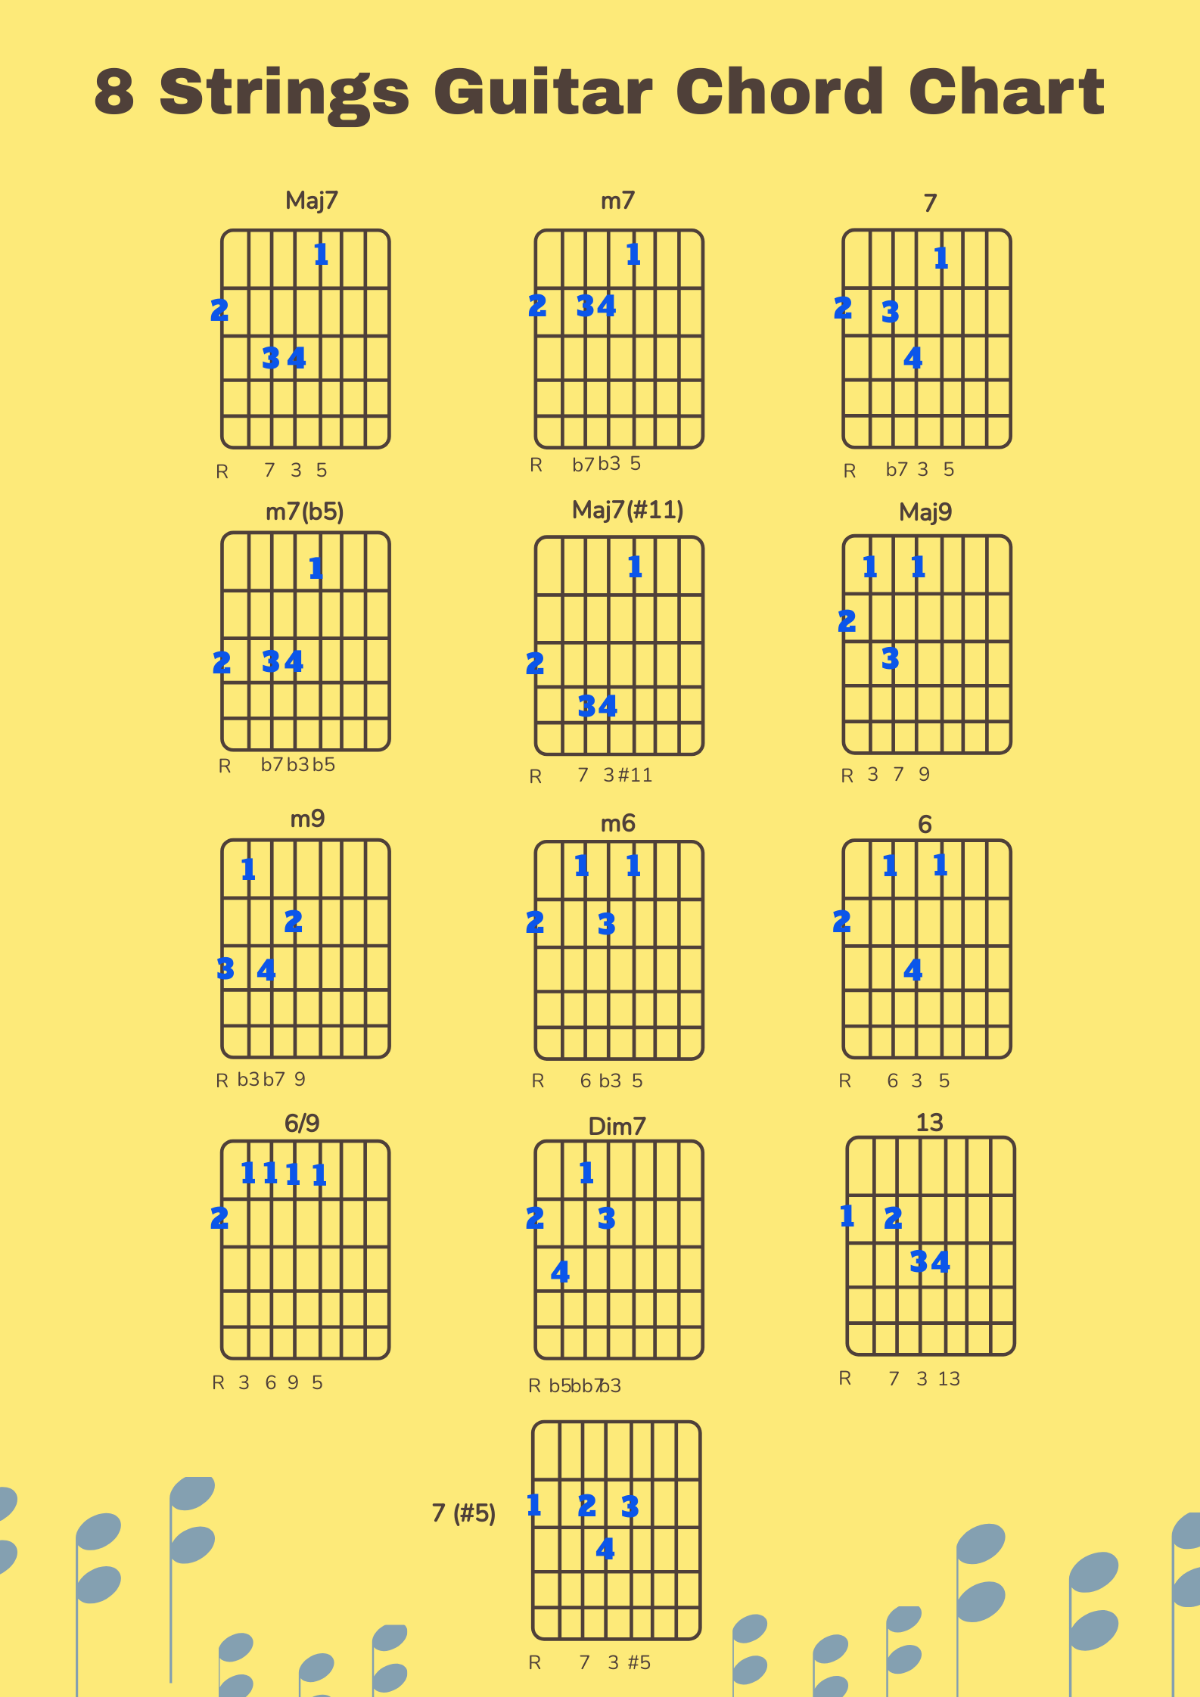 8 Strings Guitar Chord Chart Template